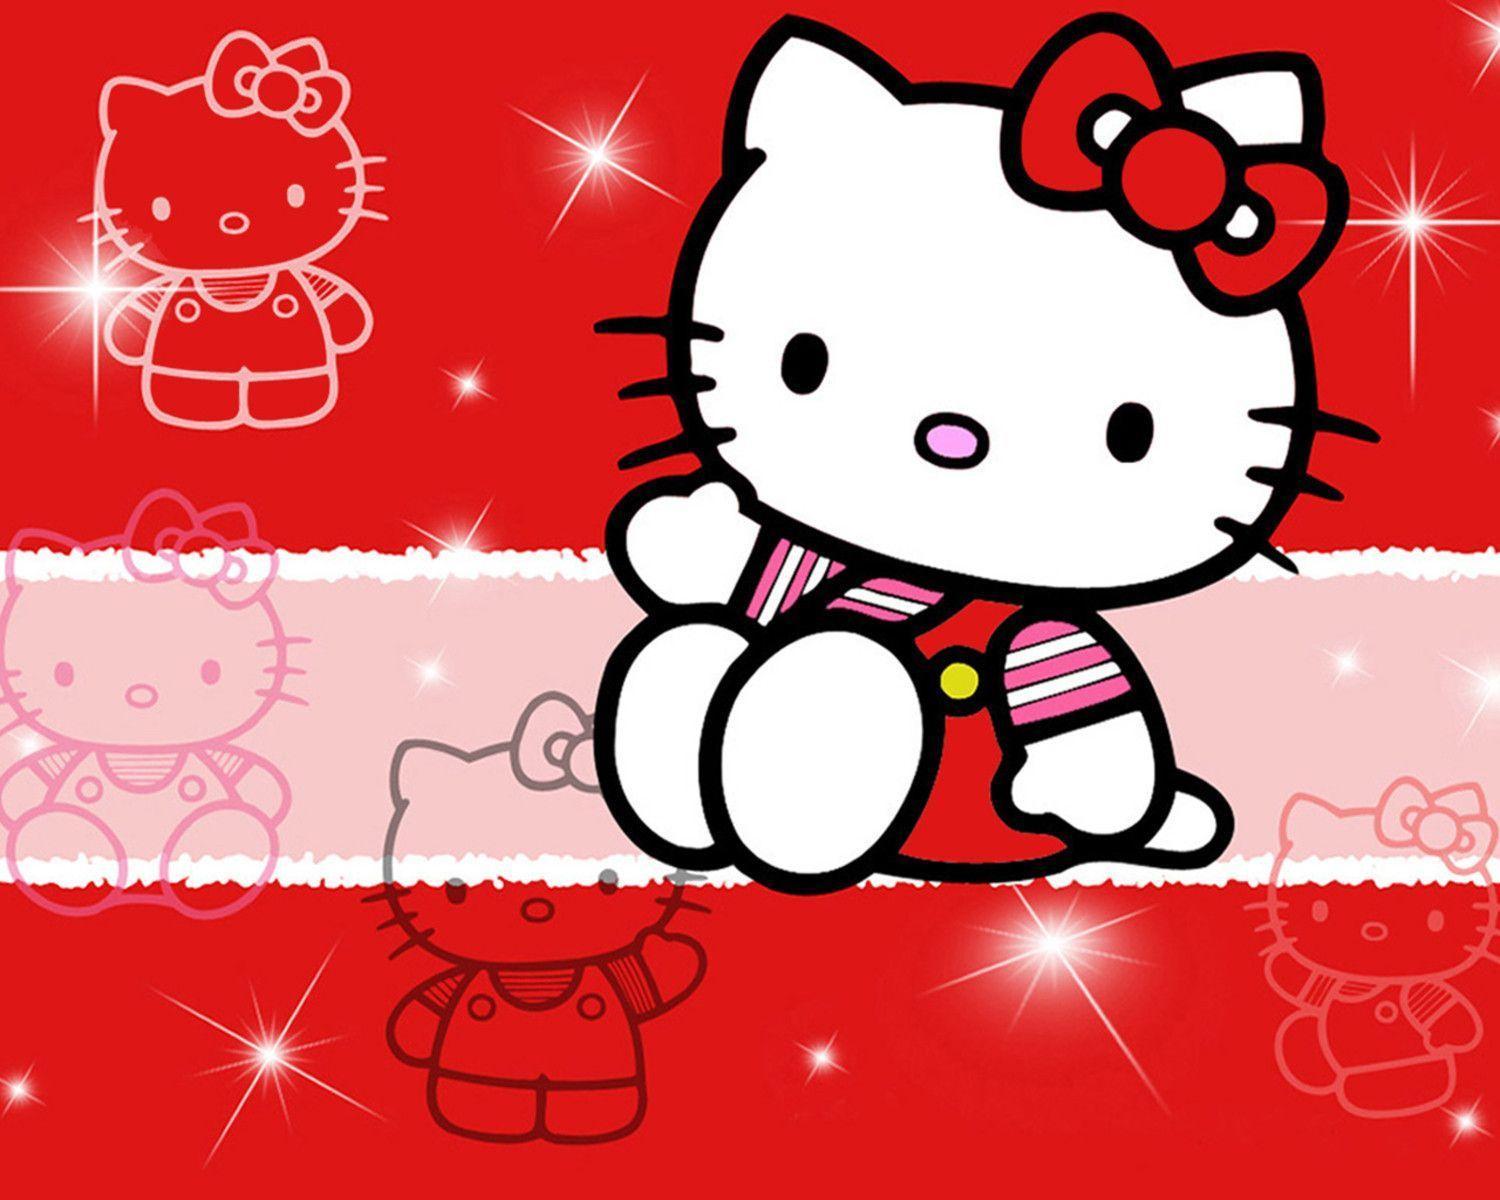 Red Hello Kitty Wallpaper Desktop, wallpaper, Red Hello Kitty